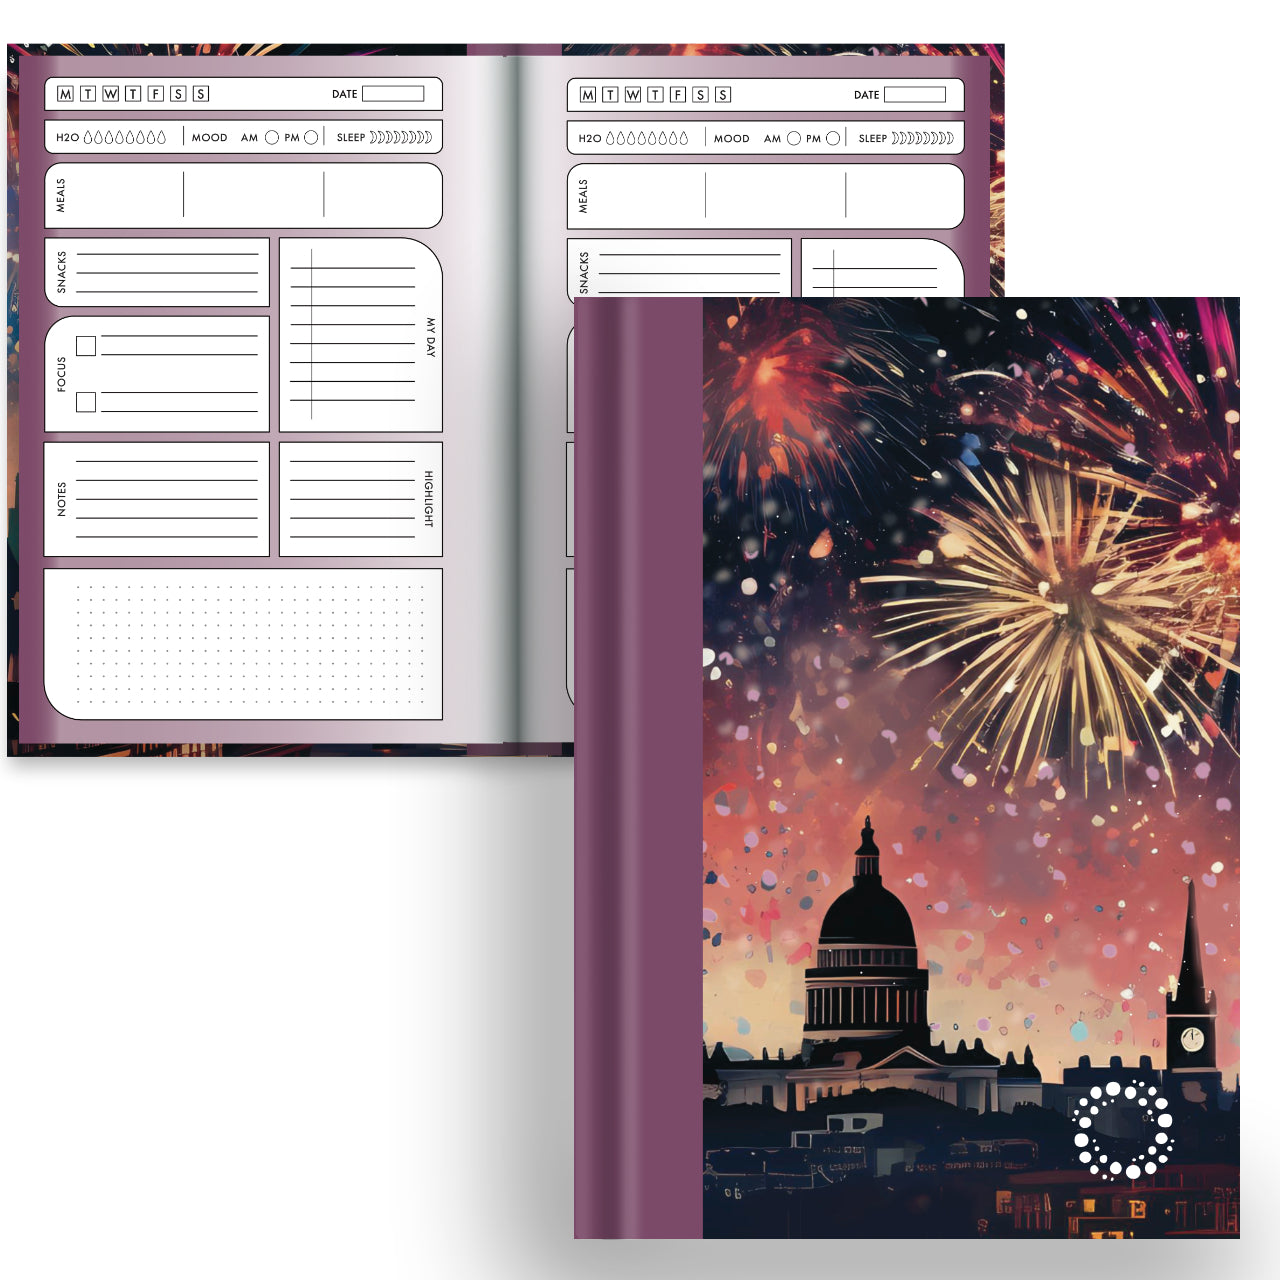 Fireworks - A5 Hardback Notebook